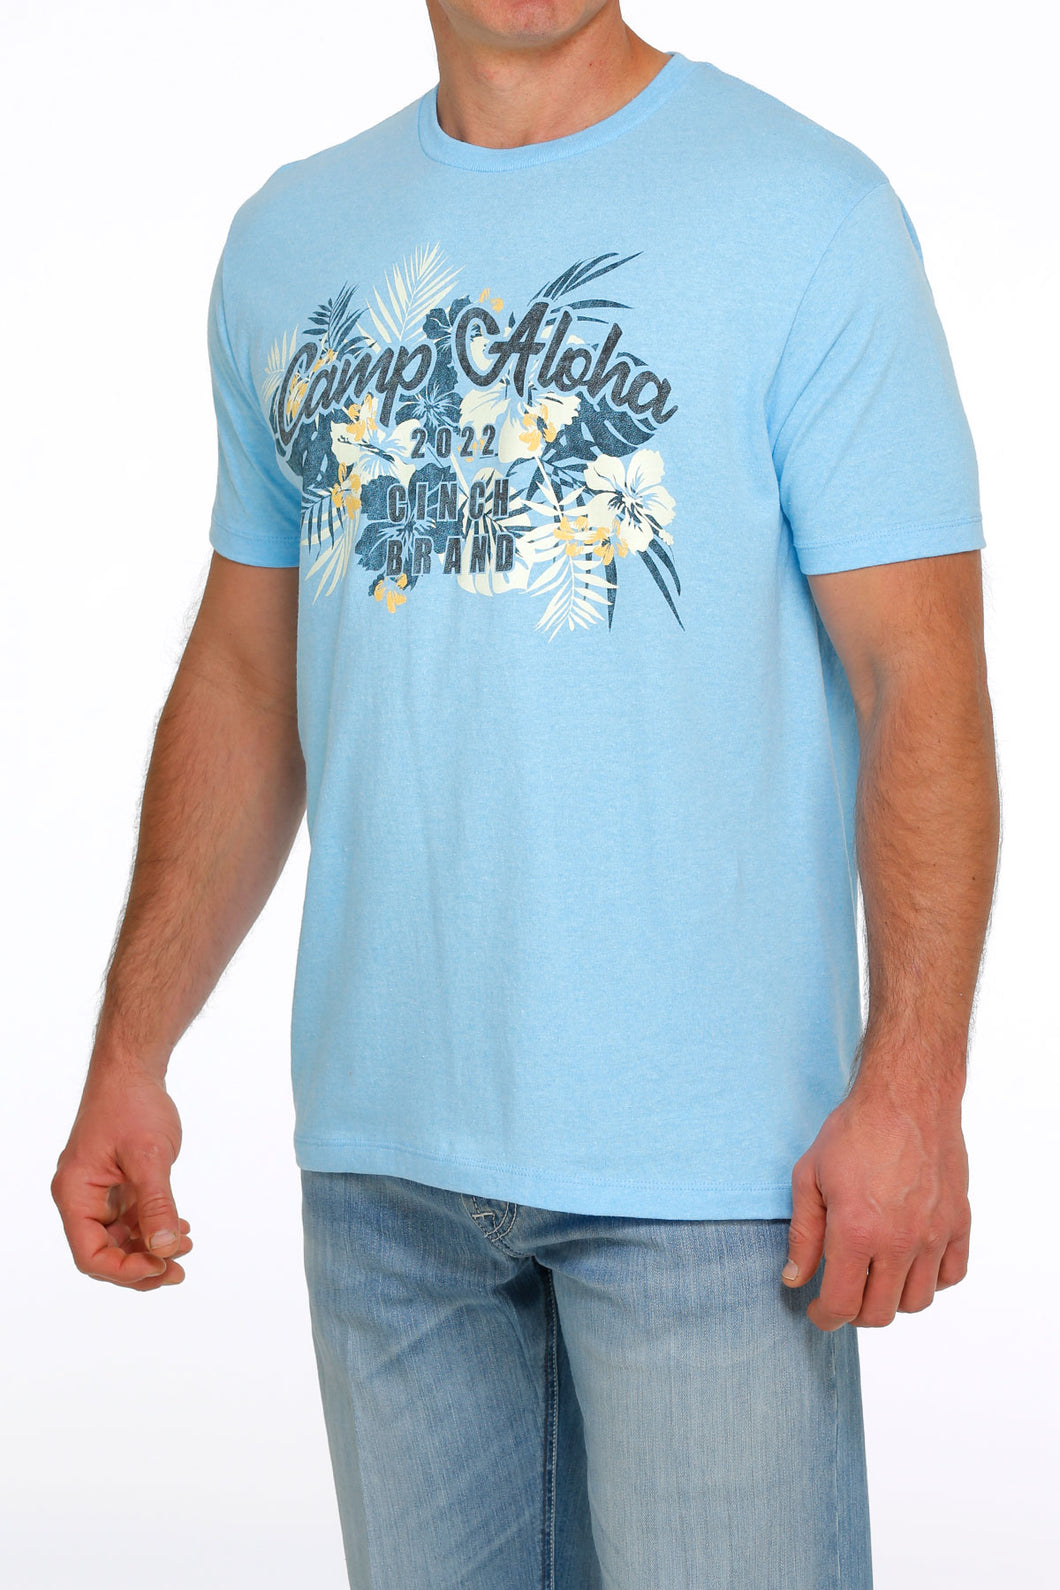 'Cinch' Men's Camp Aloha Floral T Shirt - Heather Blue